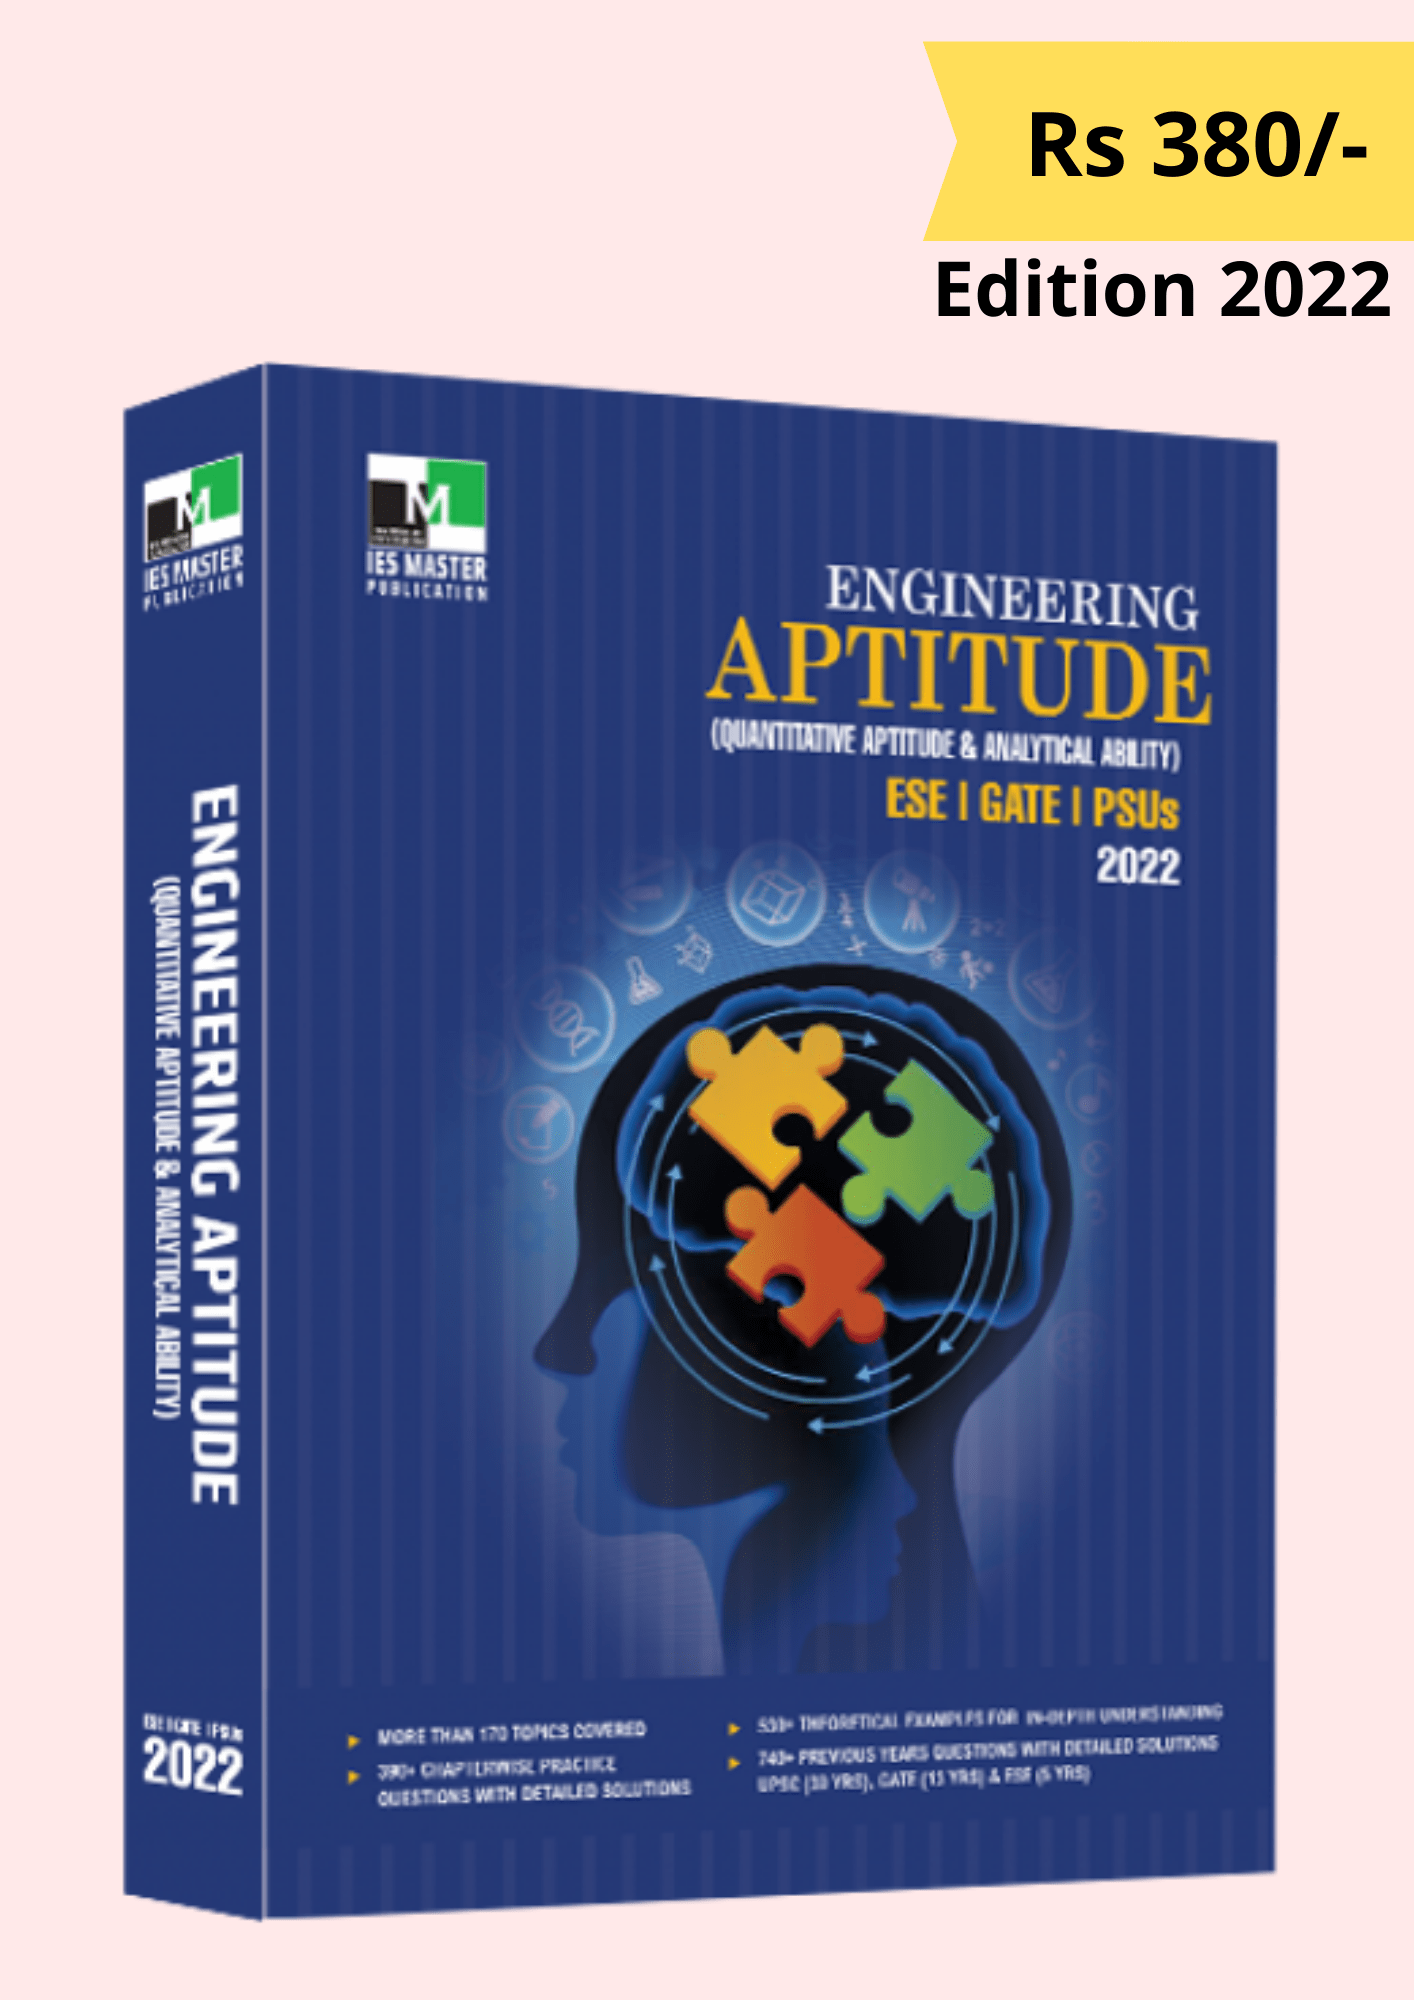 ies-master-engineering-aptitude-for-gate-ese-psus-edition-2022-book-wishallbook-online